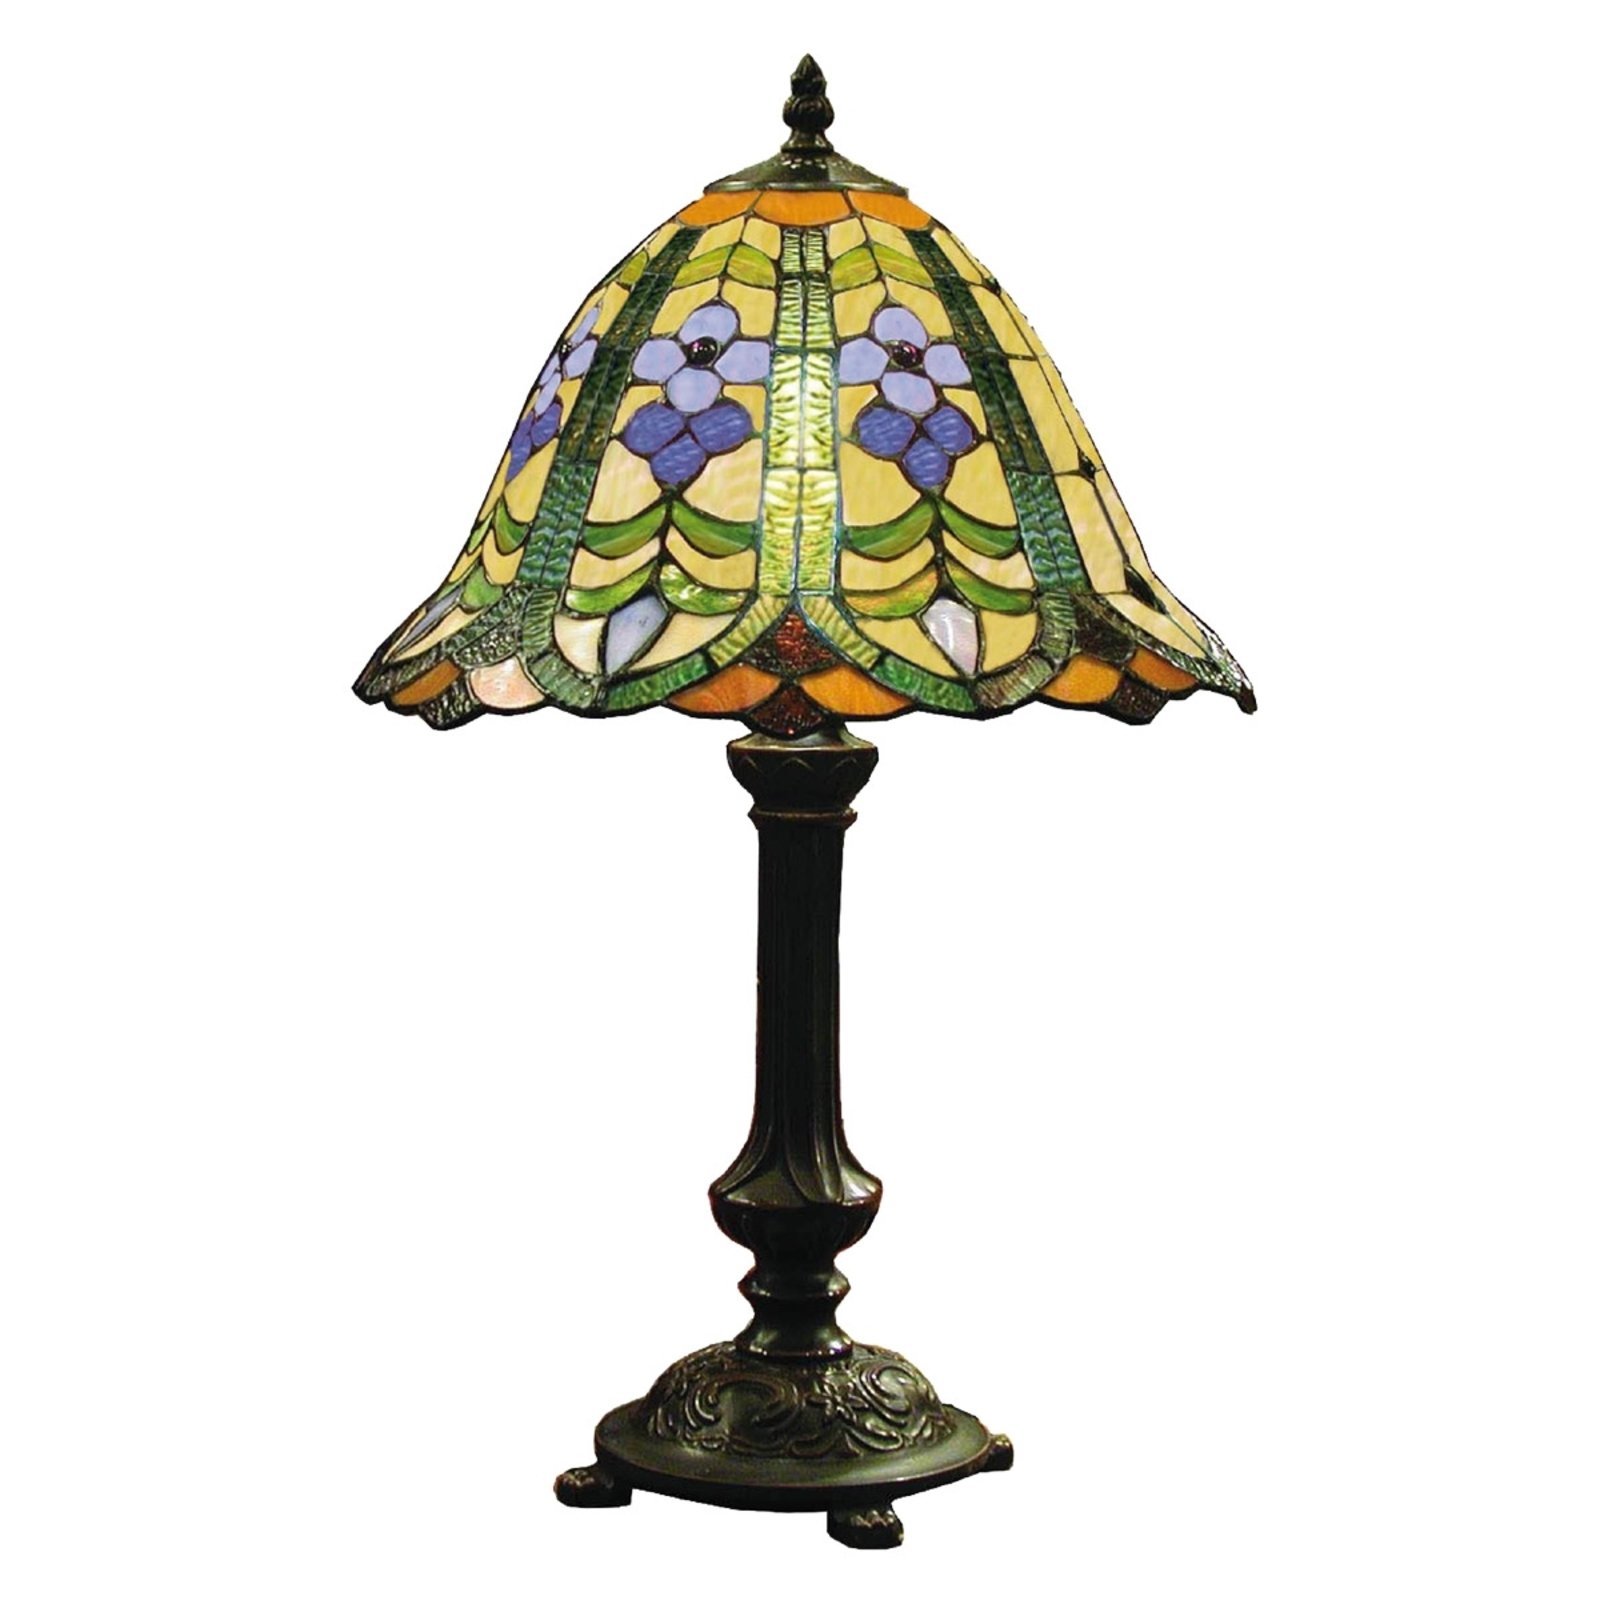 Gebloemde tafellamp Eleanor in Tiffany-stijl